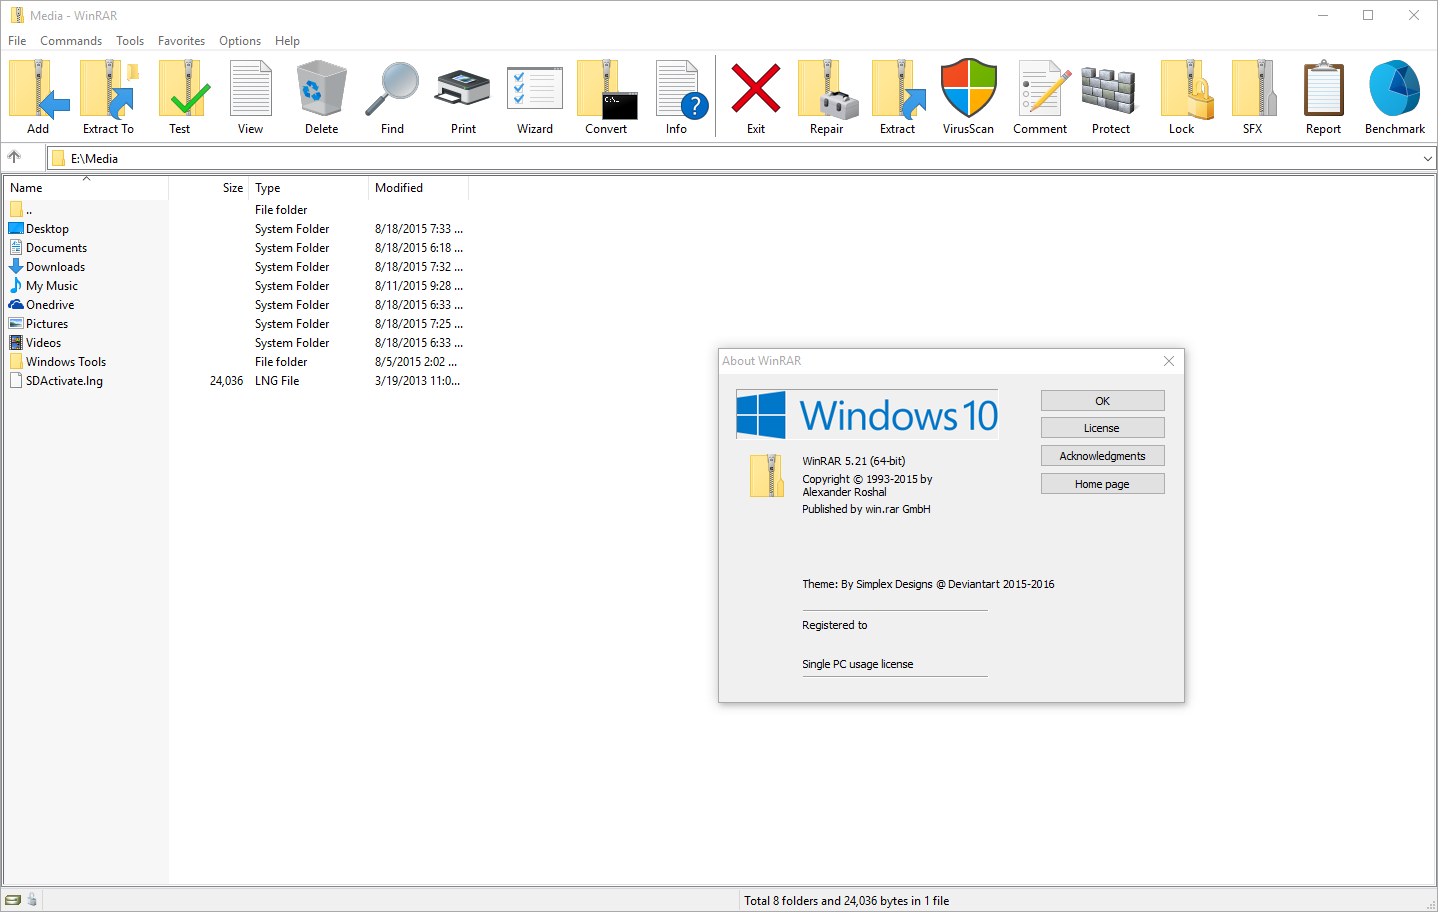 download latest winrar 64 bit windows 10